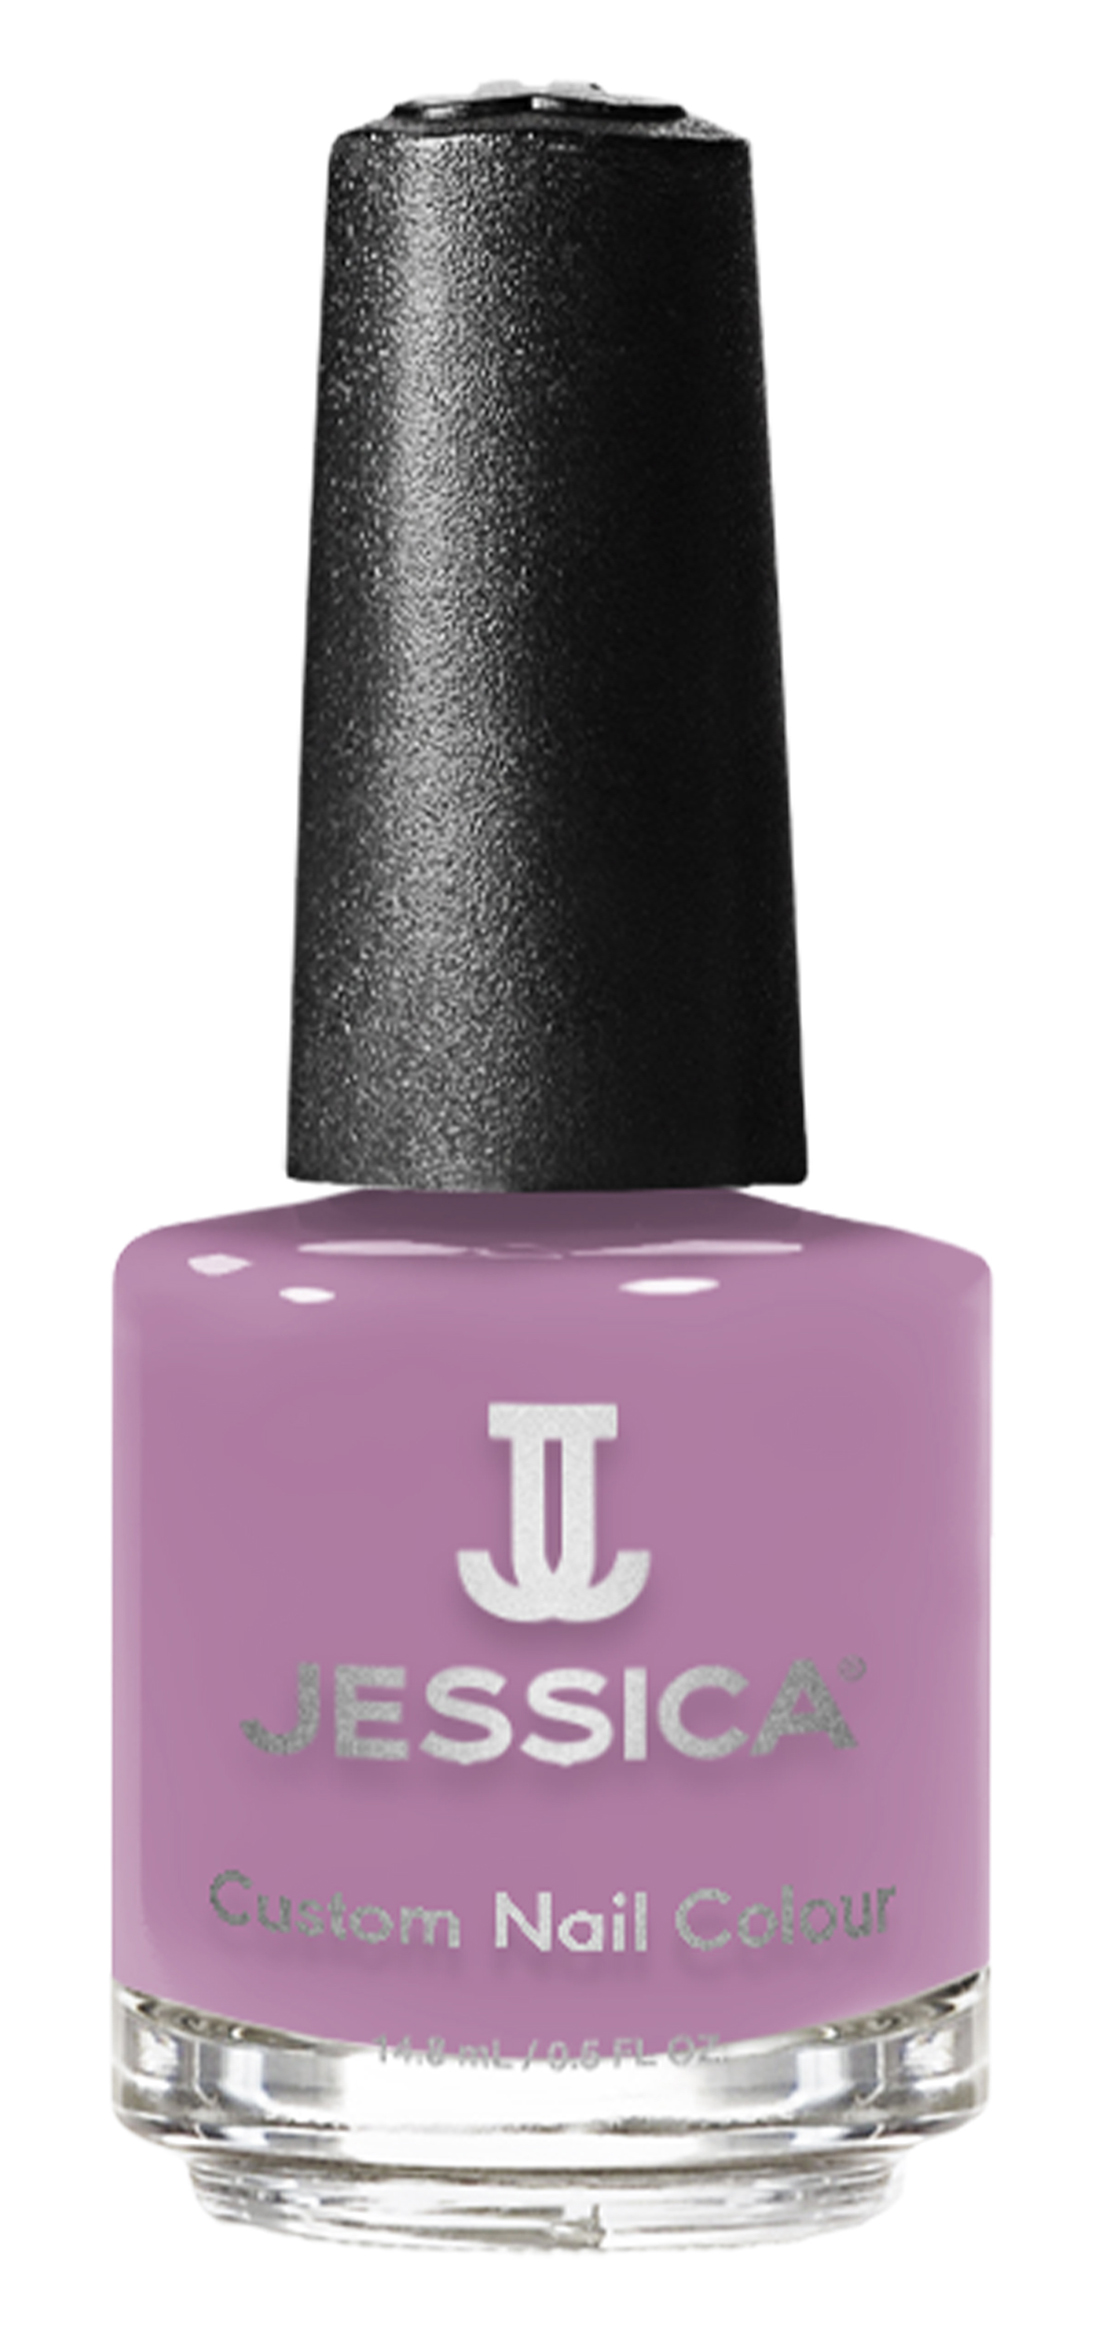 Jessica nails Caribbean Cooler